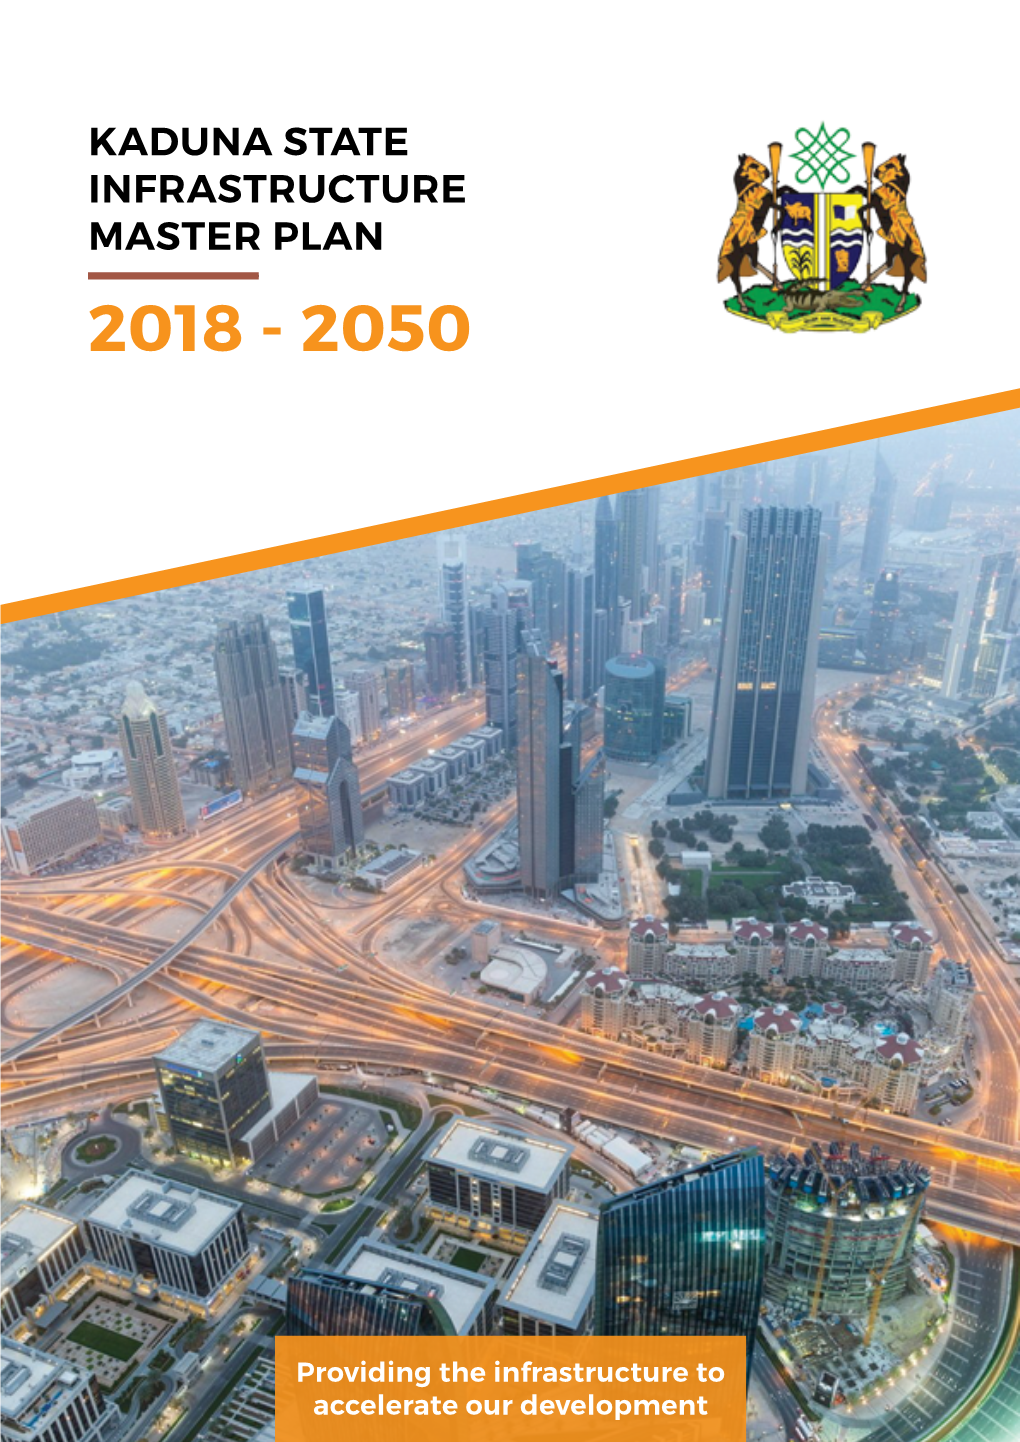 Kaduna State Infrastructure Master Plan 2018 - 2050